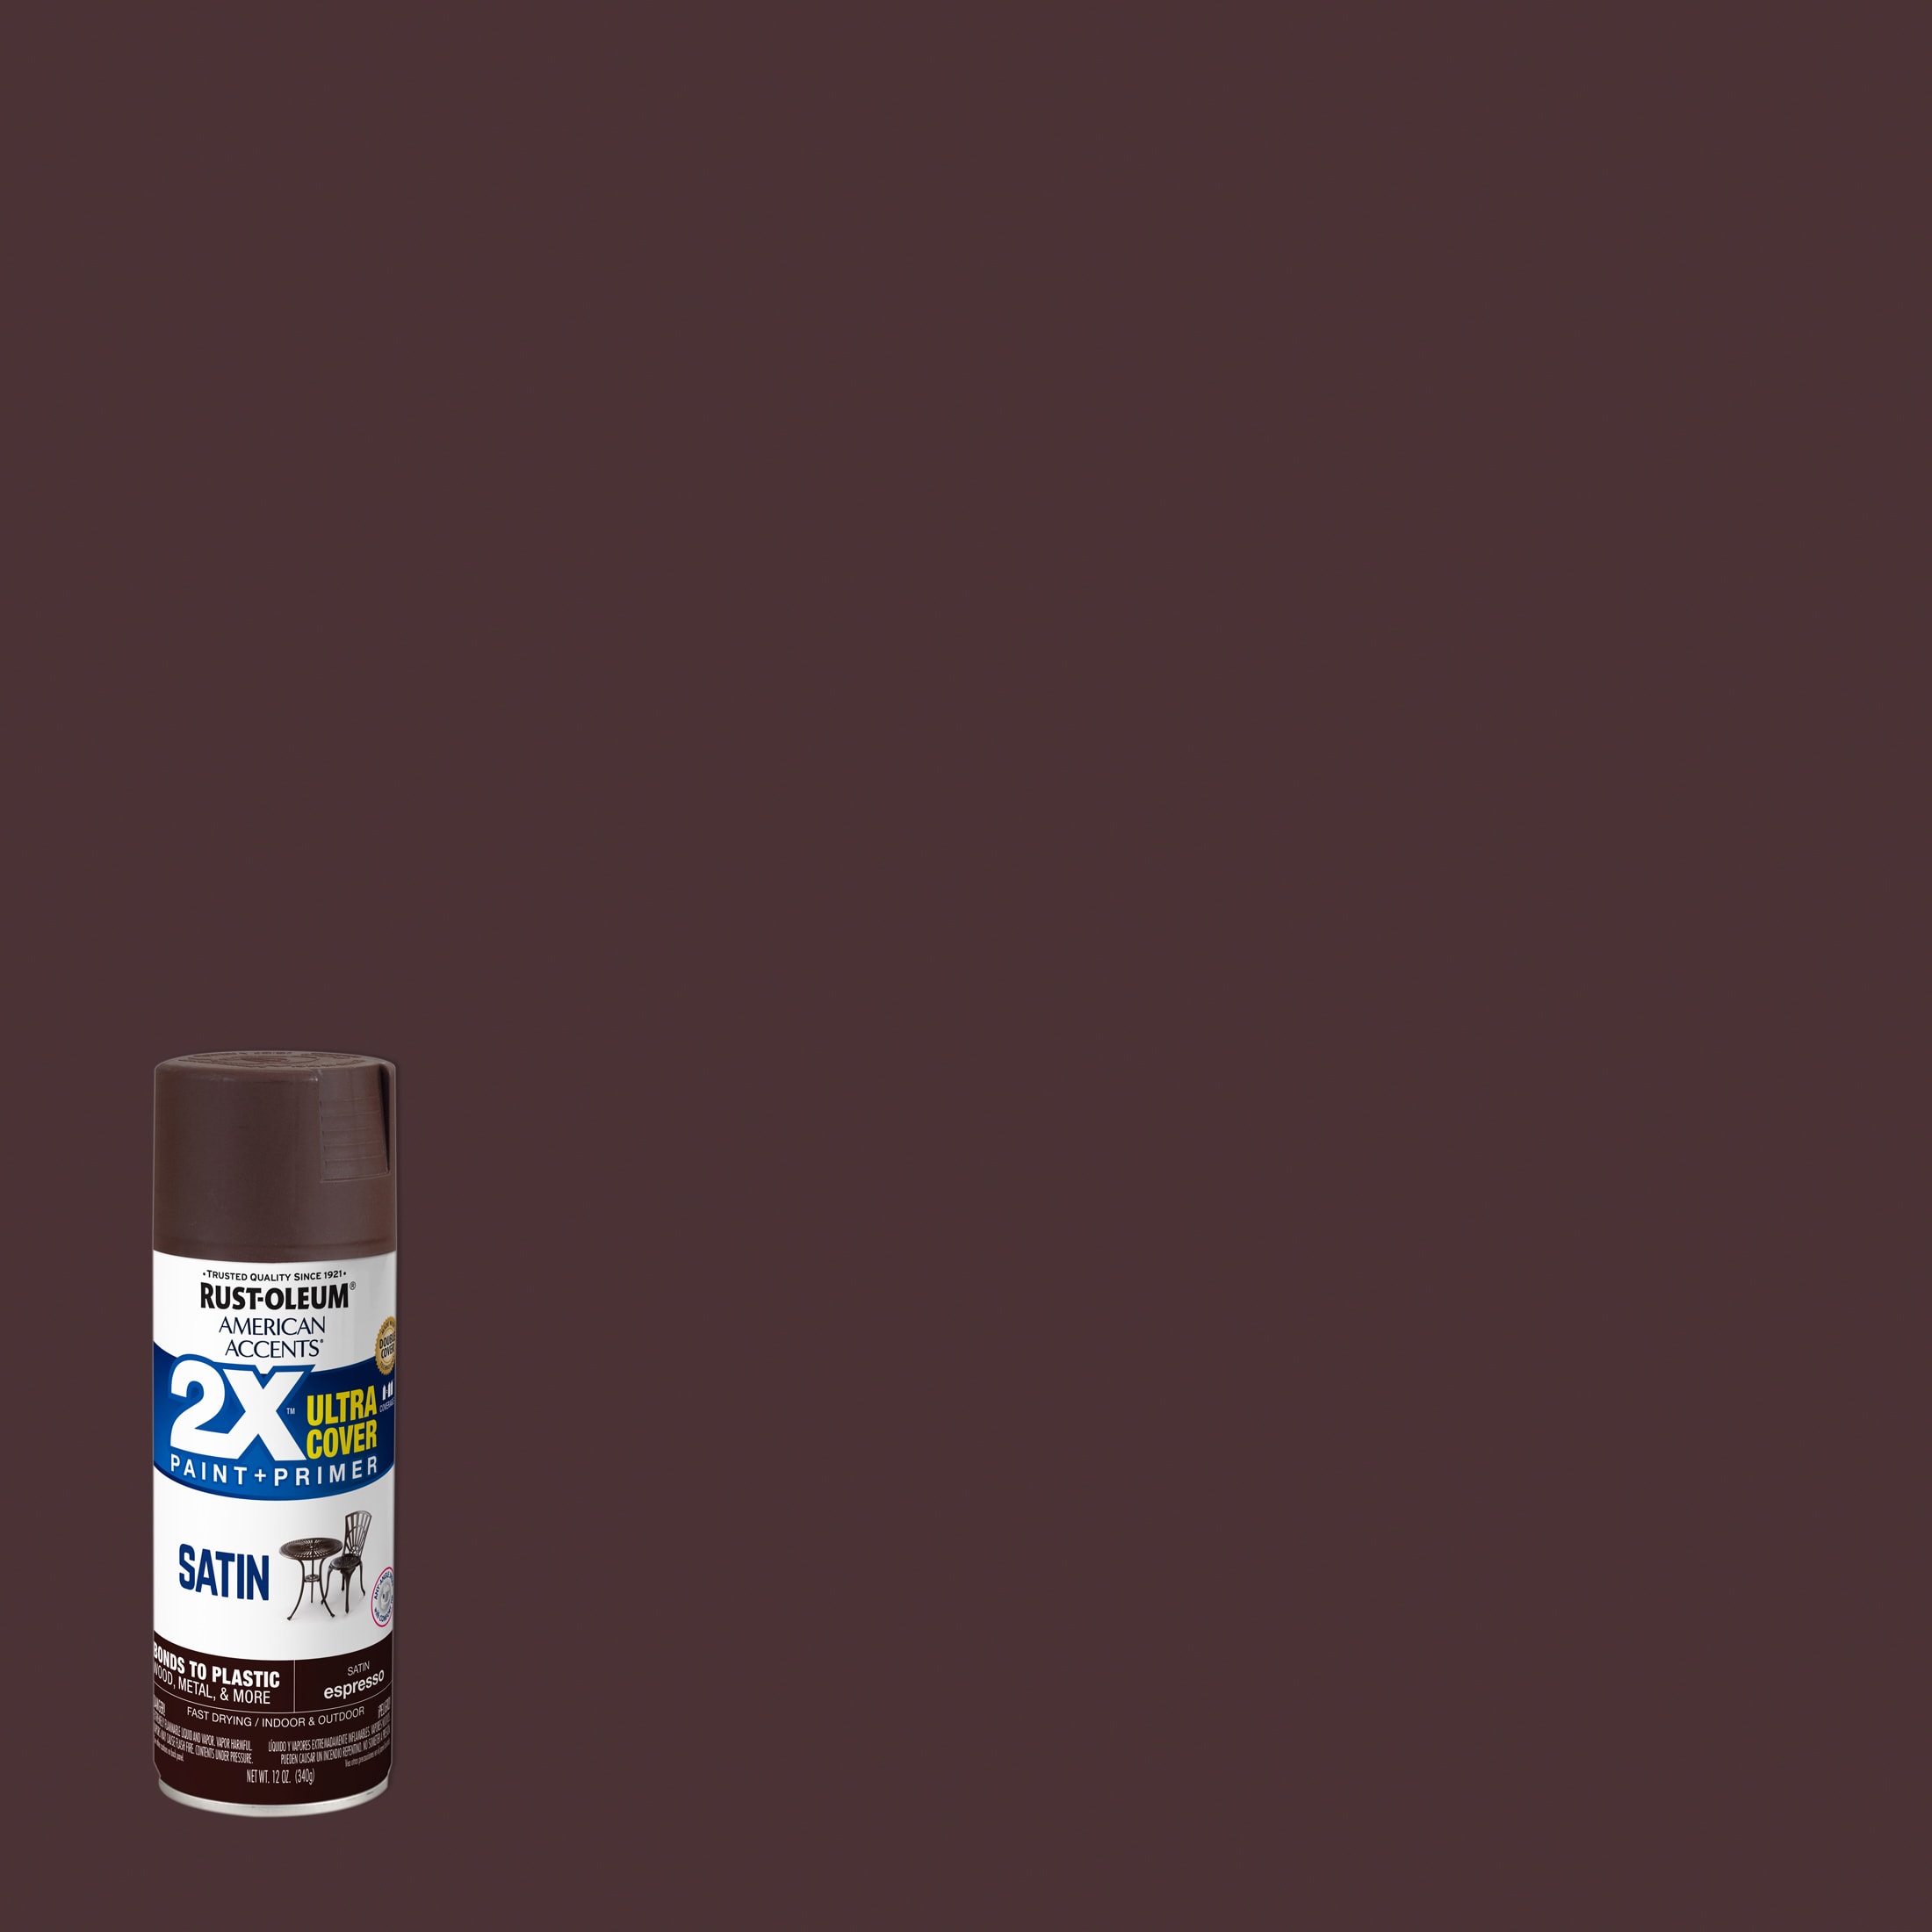 Rust Oleum Painter's Touch 2X Ultra Cover Premium Latex Paint, Kona Brown - 8 fl oz can